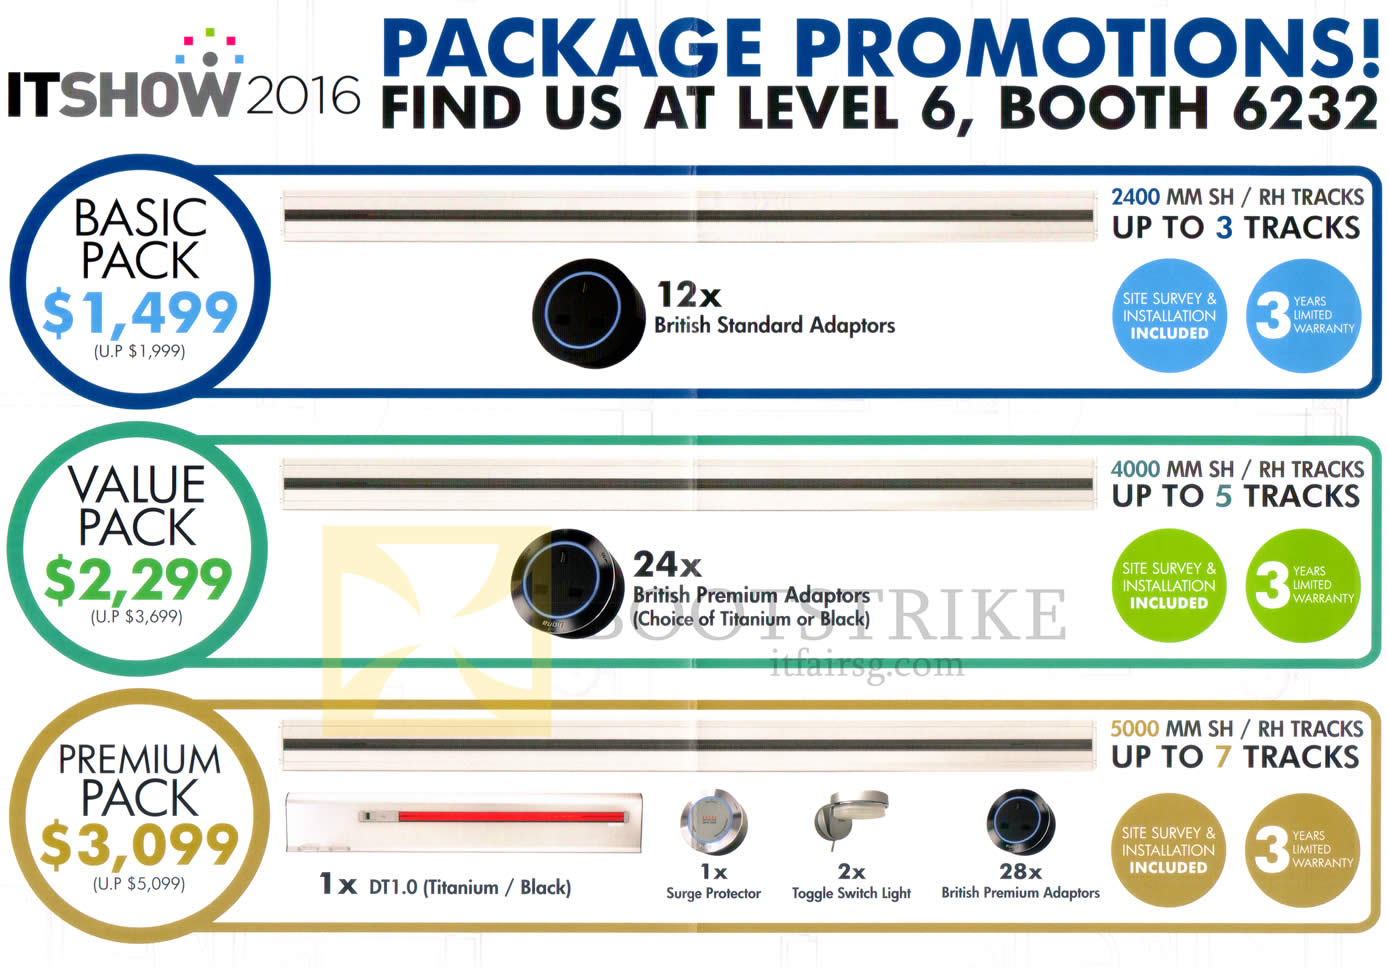 IT SHOW 2016 price list image brochure of Eubiq Packages Basic, Value, Premium Packs